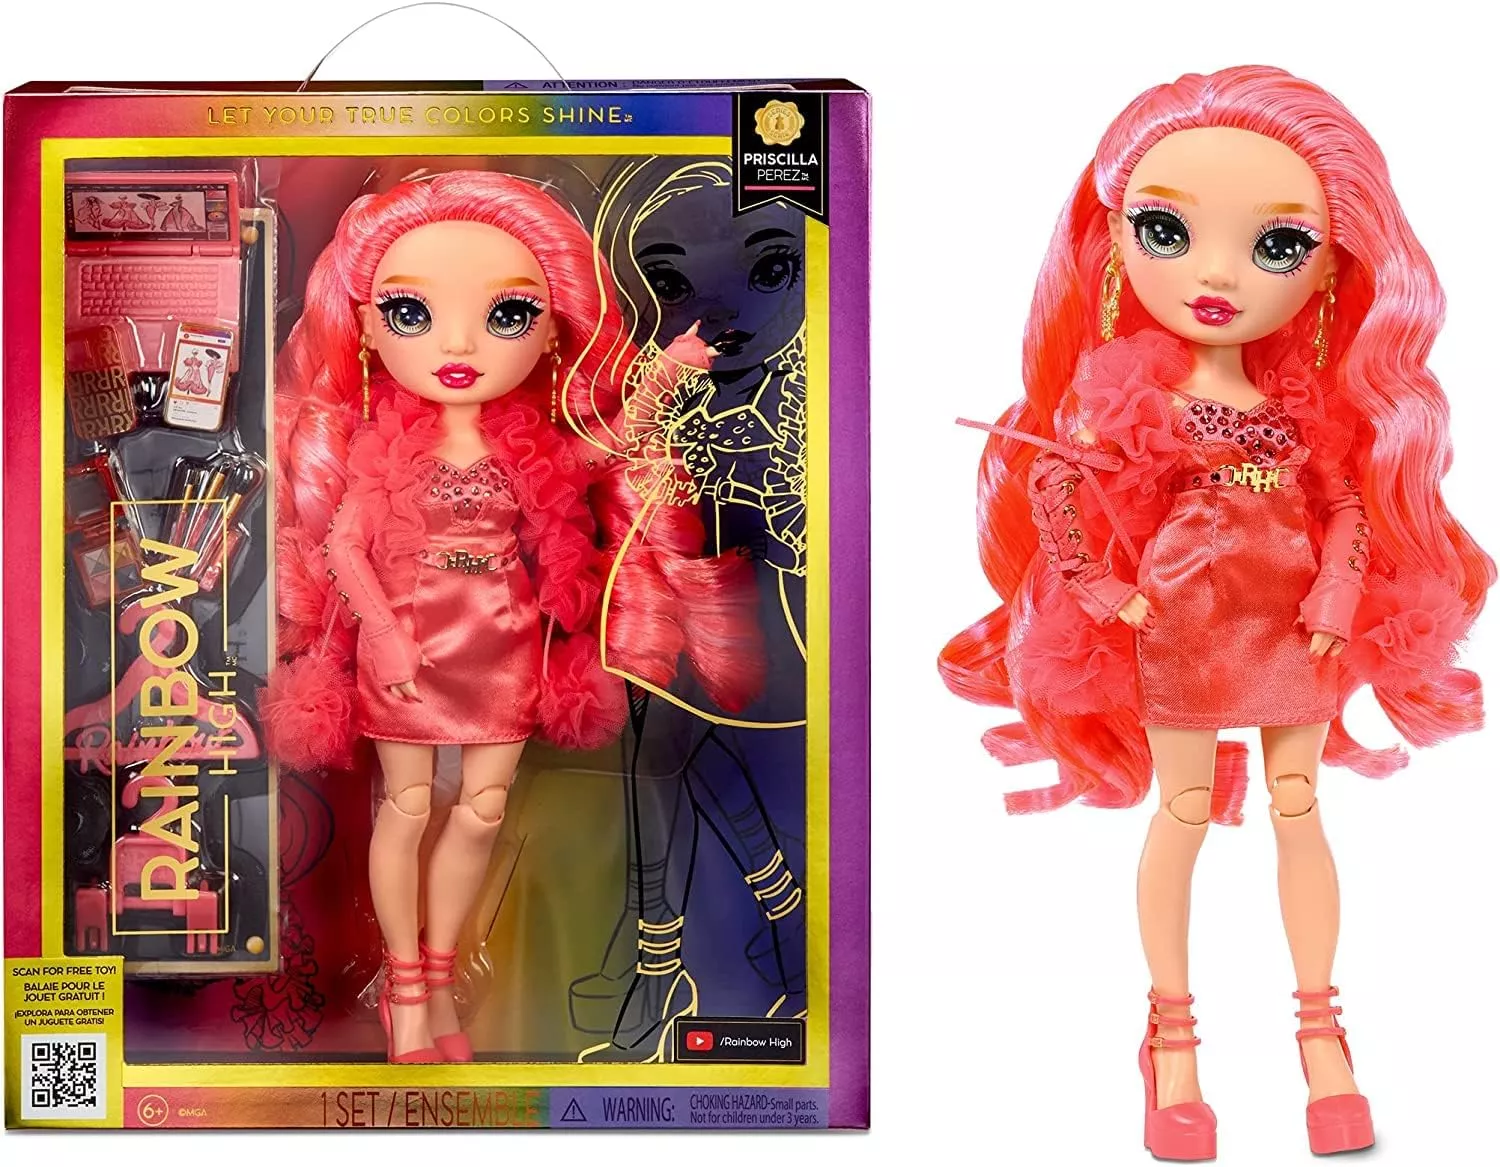  Rainbow High Fashion Doll Flamingo pink